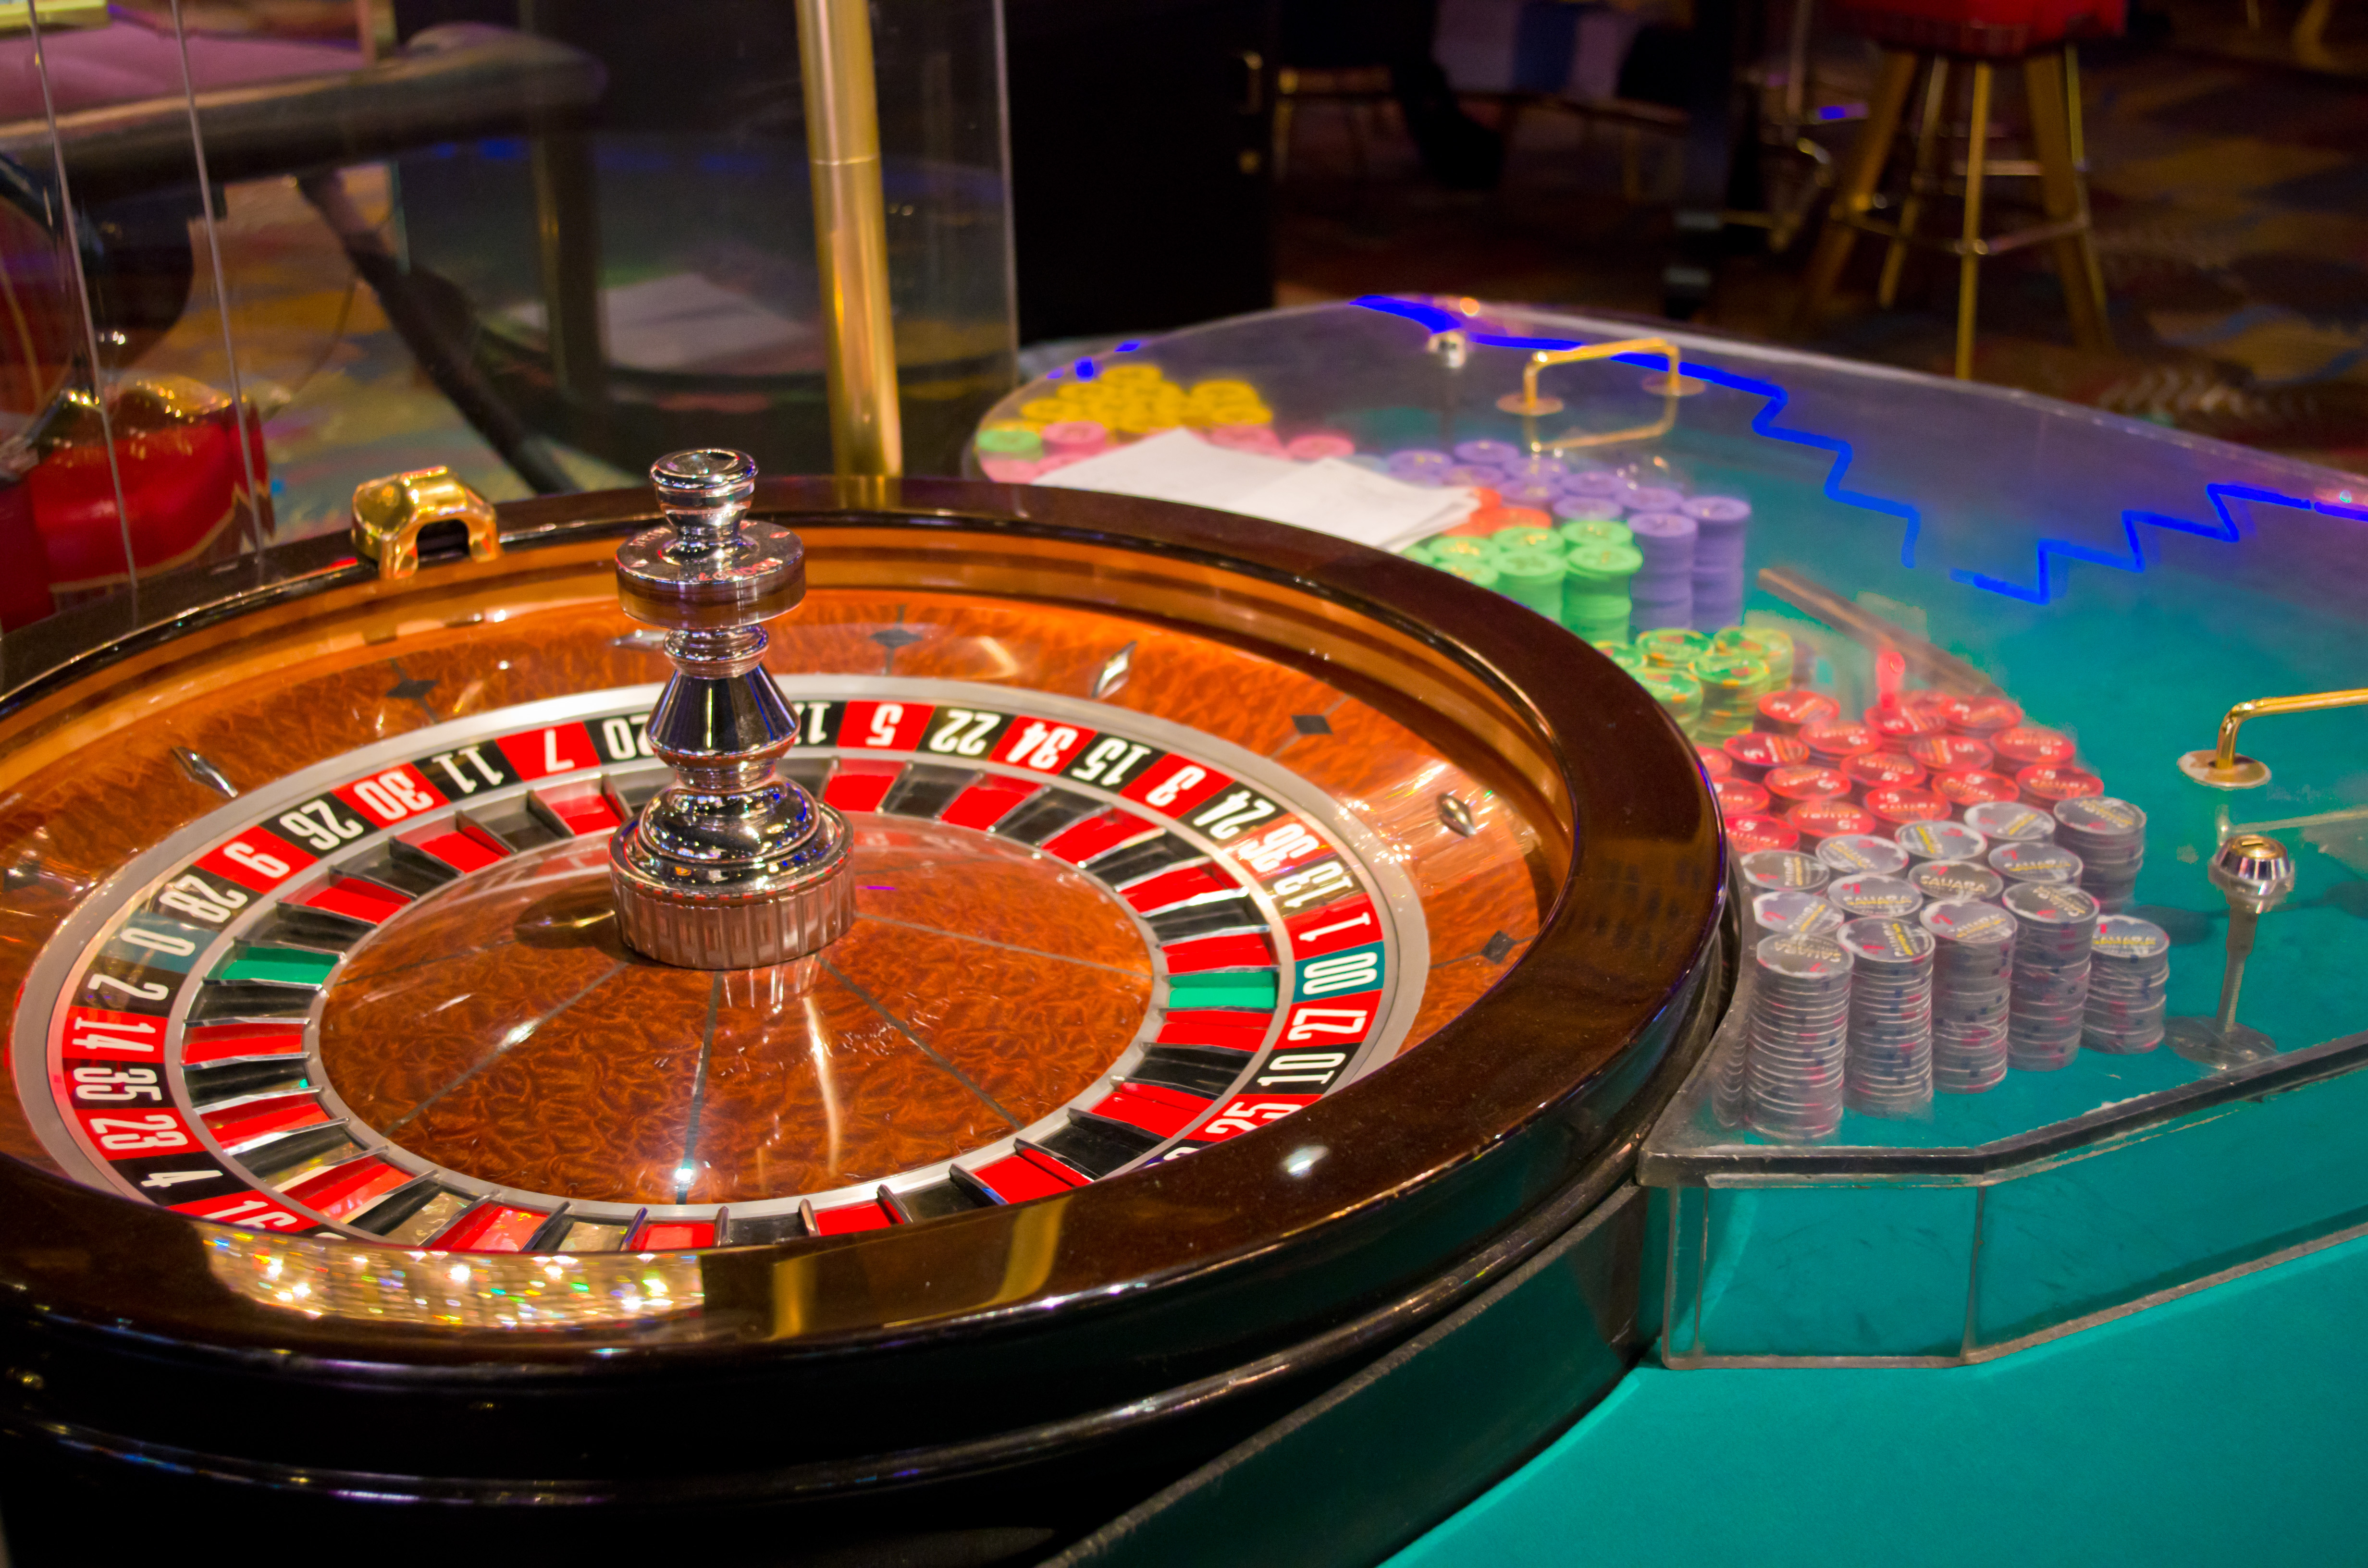 3. Disadvantages of Casino Live Streams